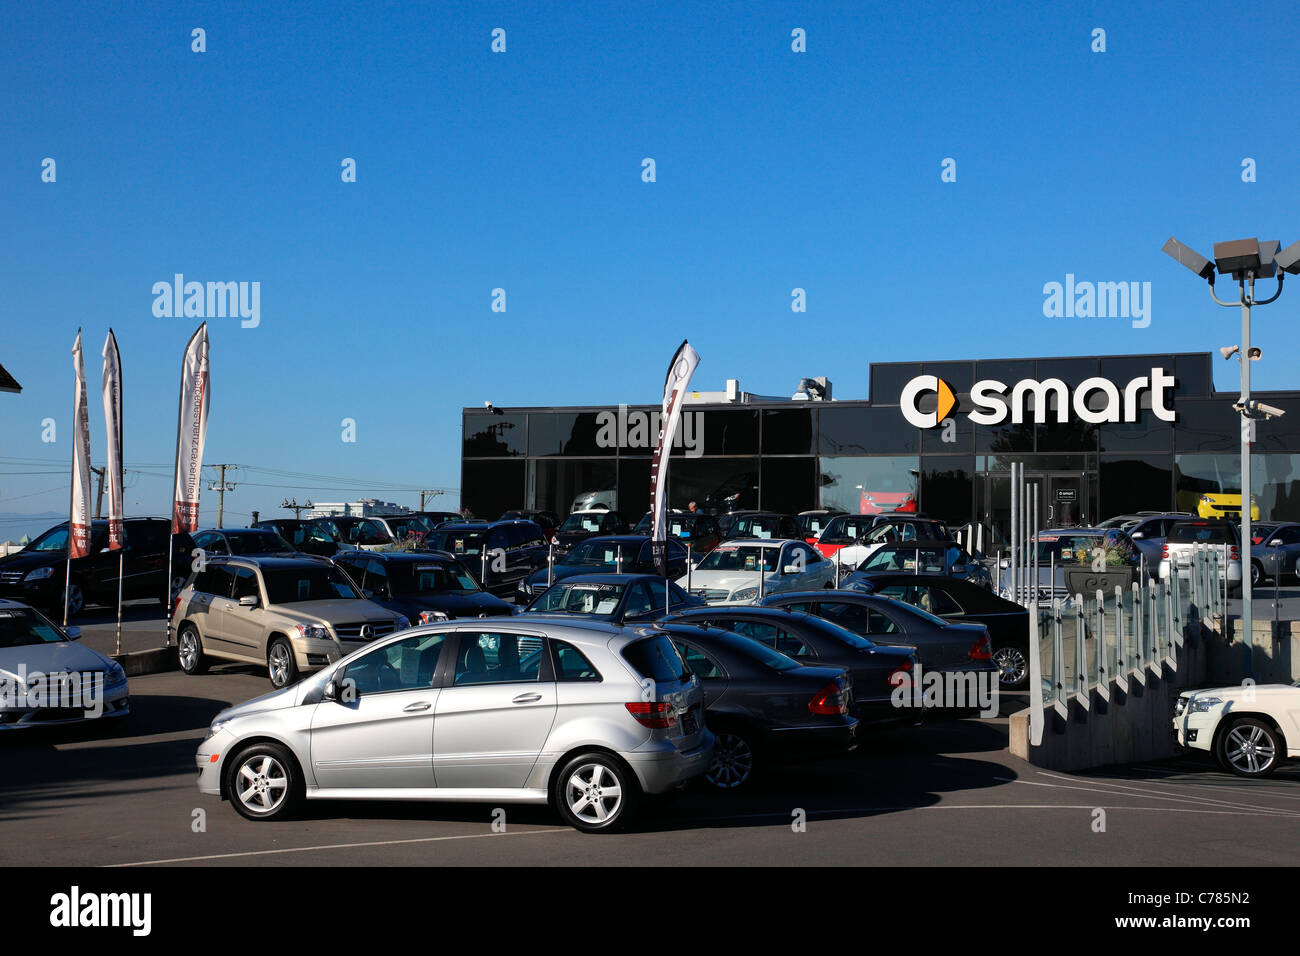 smart car lot Stock Photo